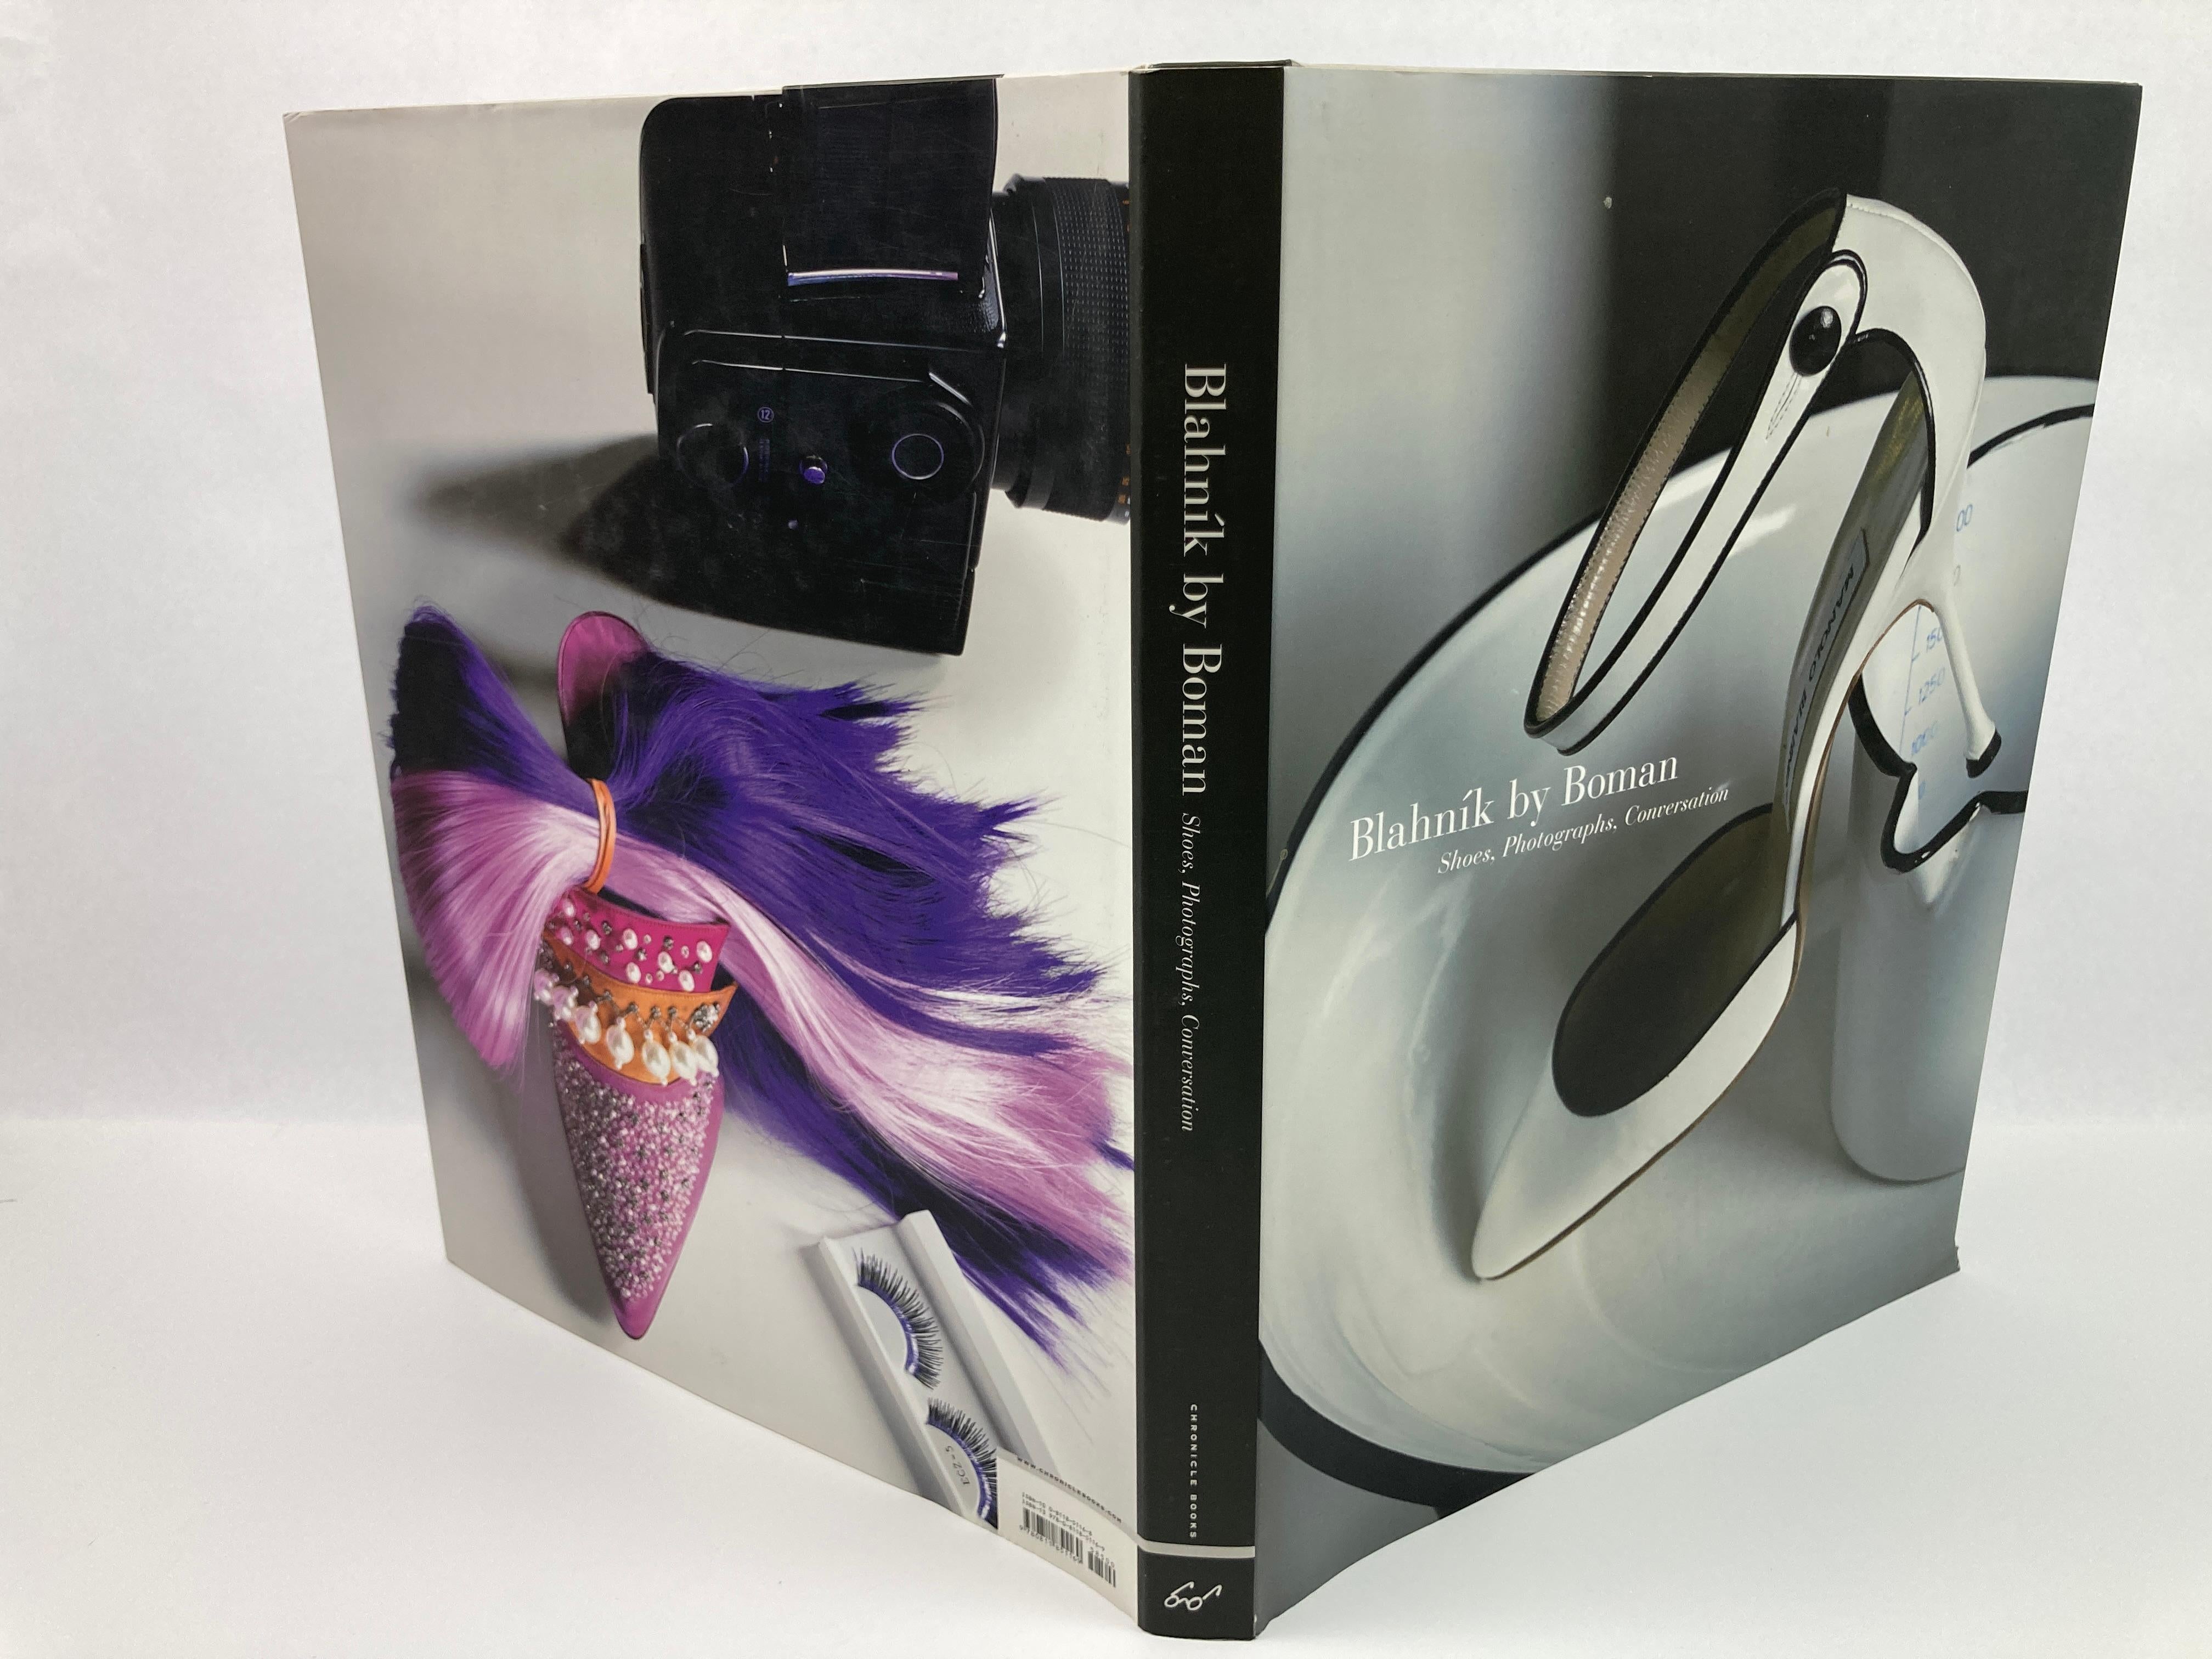 Blahnik by Boman: Shoes, Photographs, ConversationLarge Coffee Table Book 11